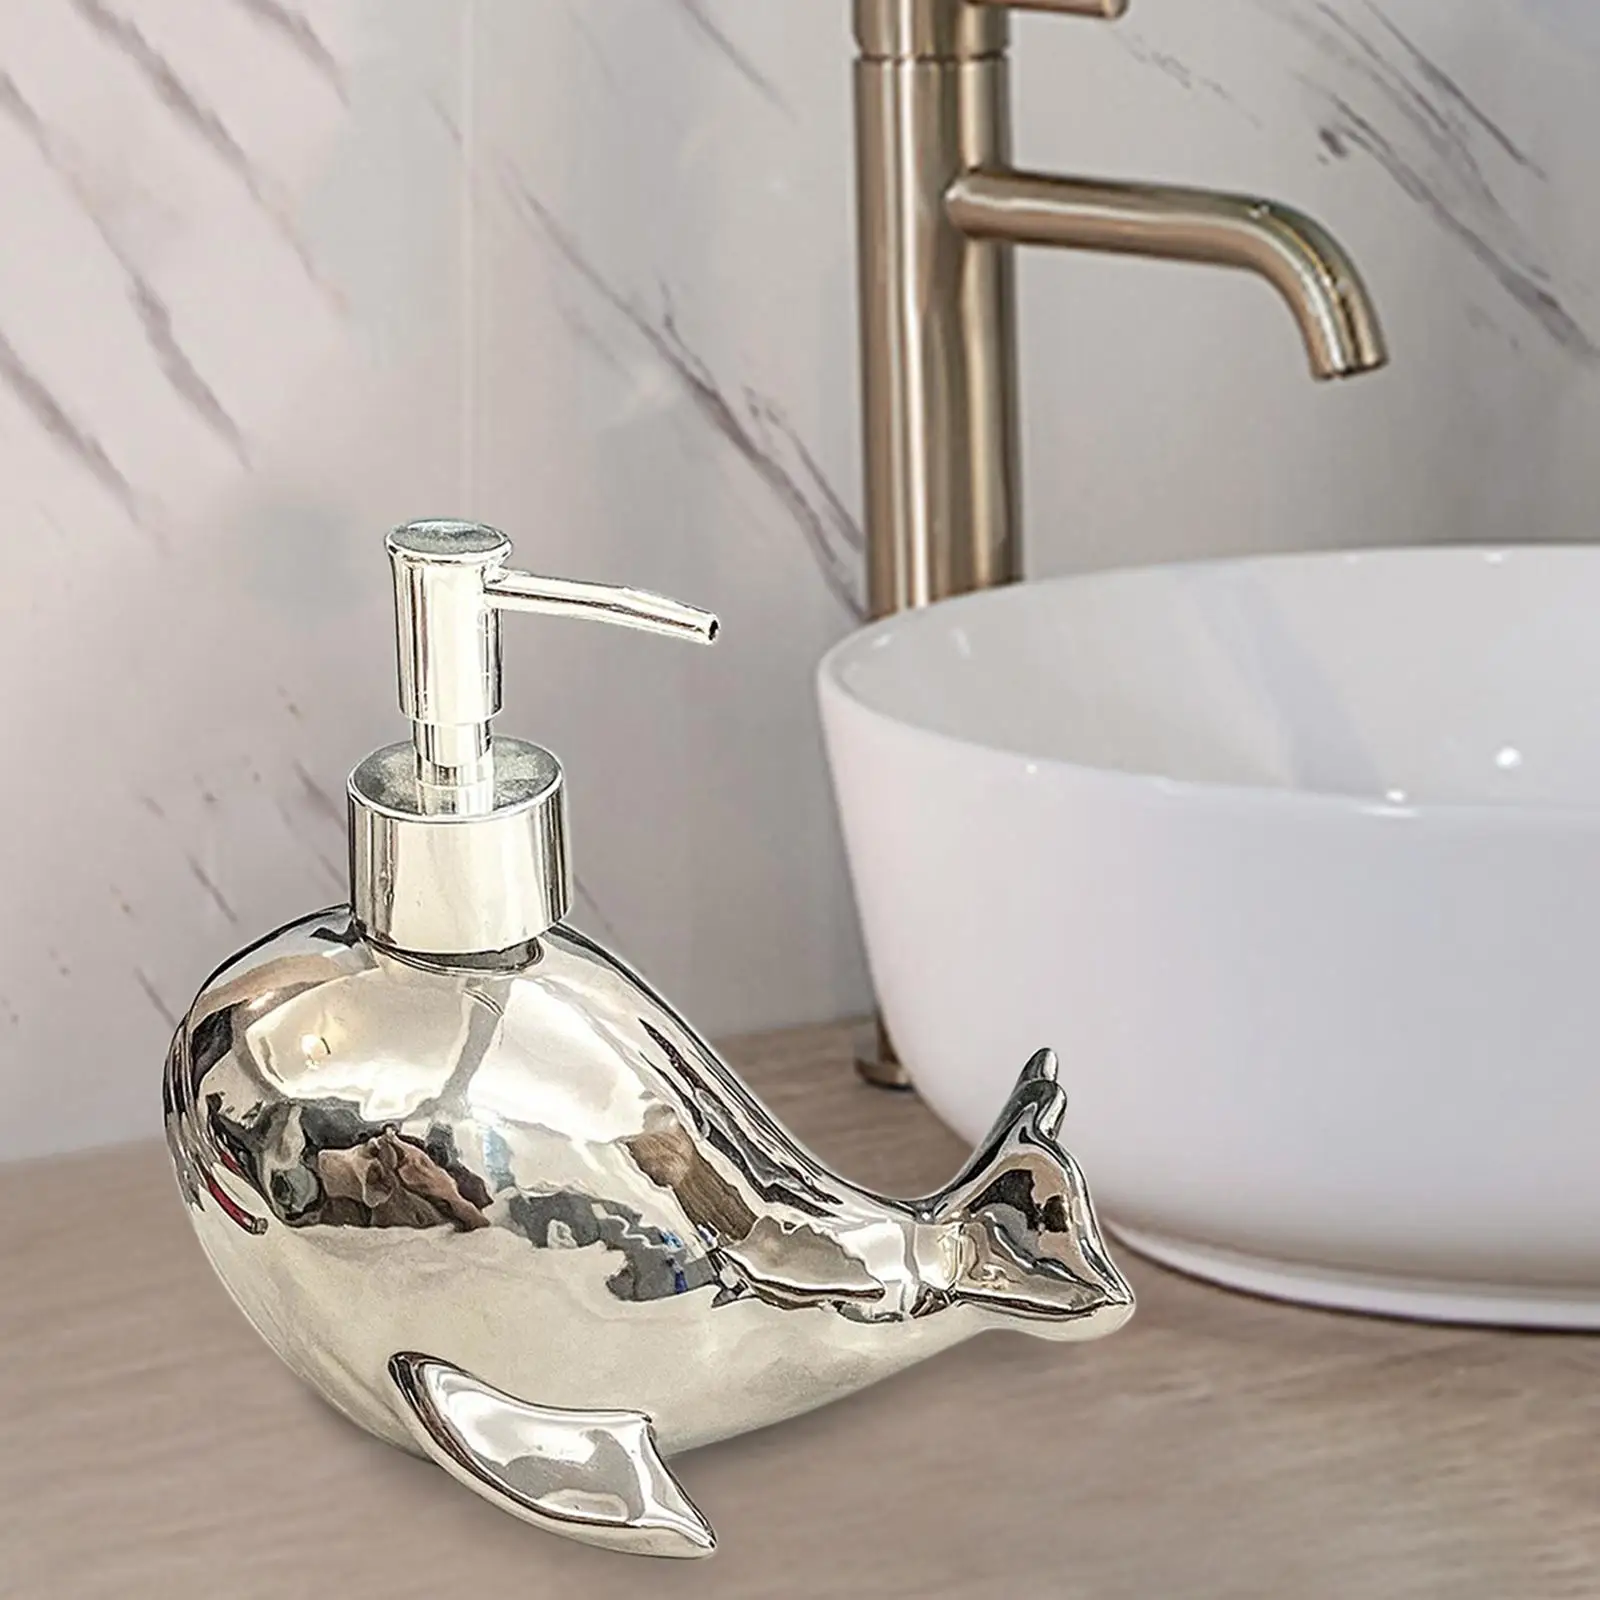 Hand Soap Dispenser 14oz Reusable Modern Bathroom Lotion Dispensers Bottle with Pump for Hotel Restaurant Bar Kitchen Shampoo